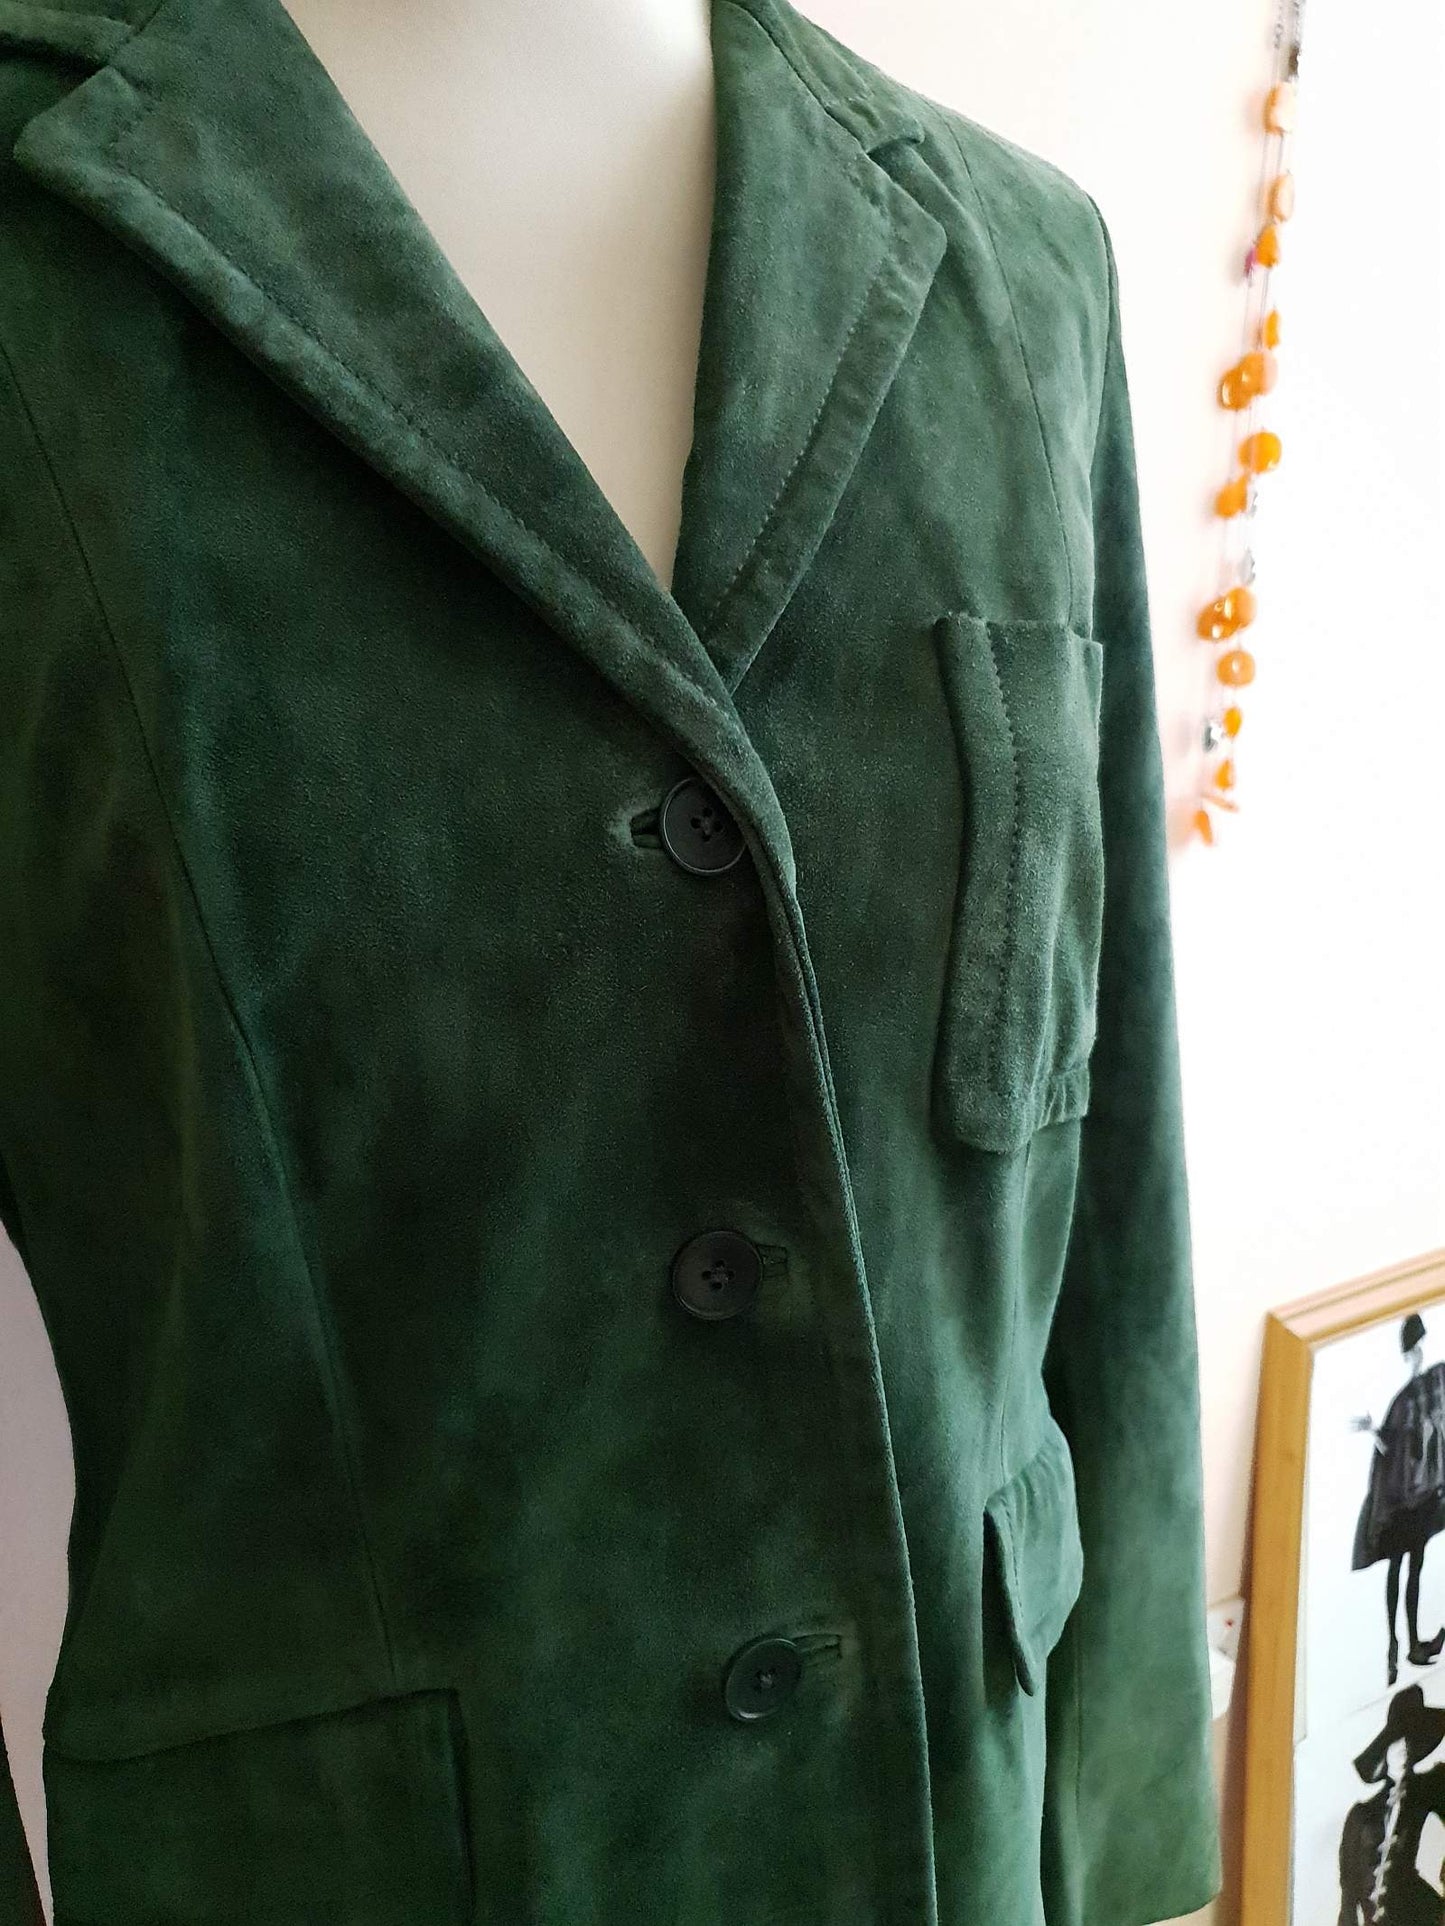 Vintage Donna Karan DKNY Dark Green Suede Leather Jacket - Size 12